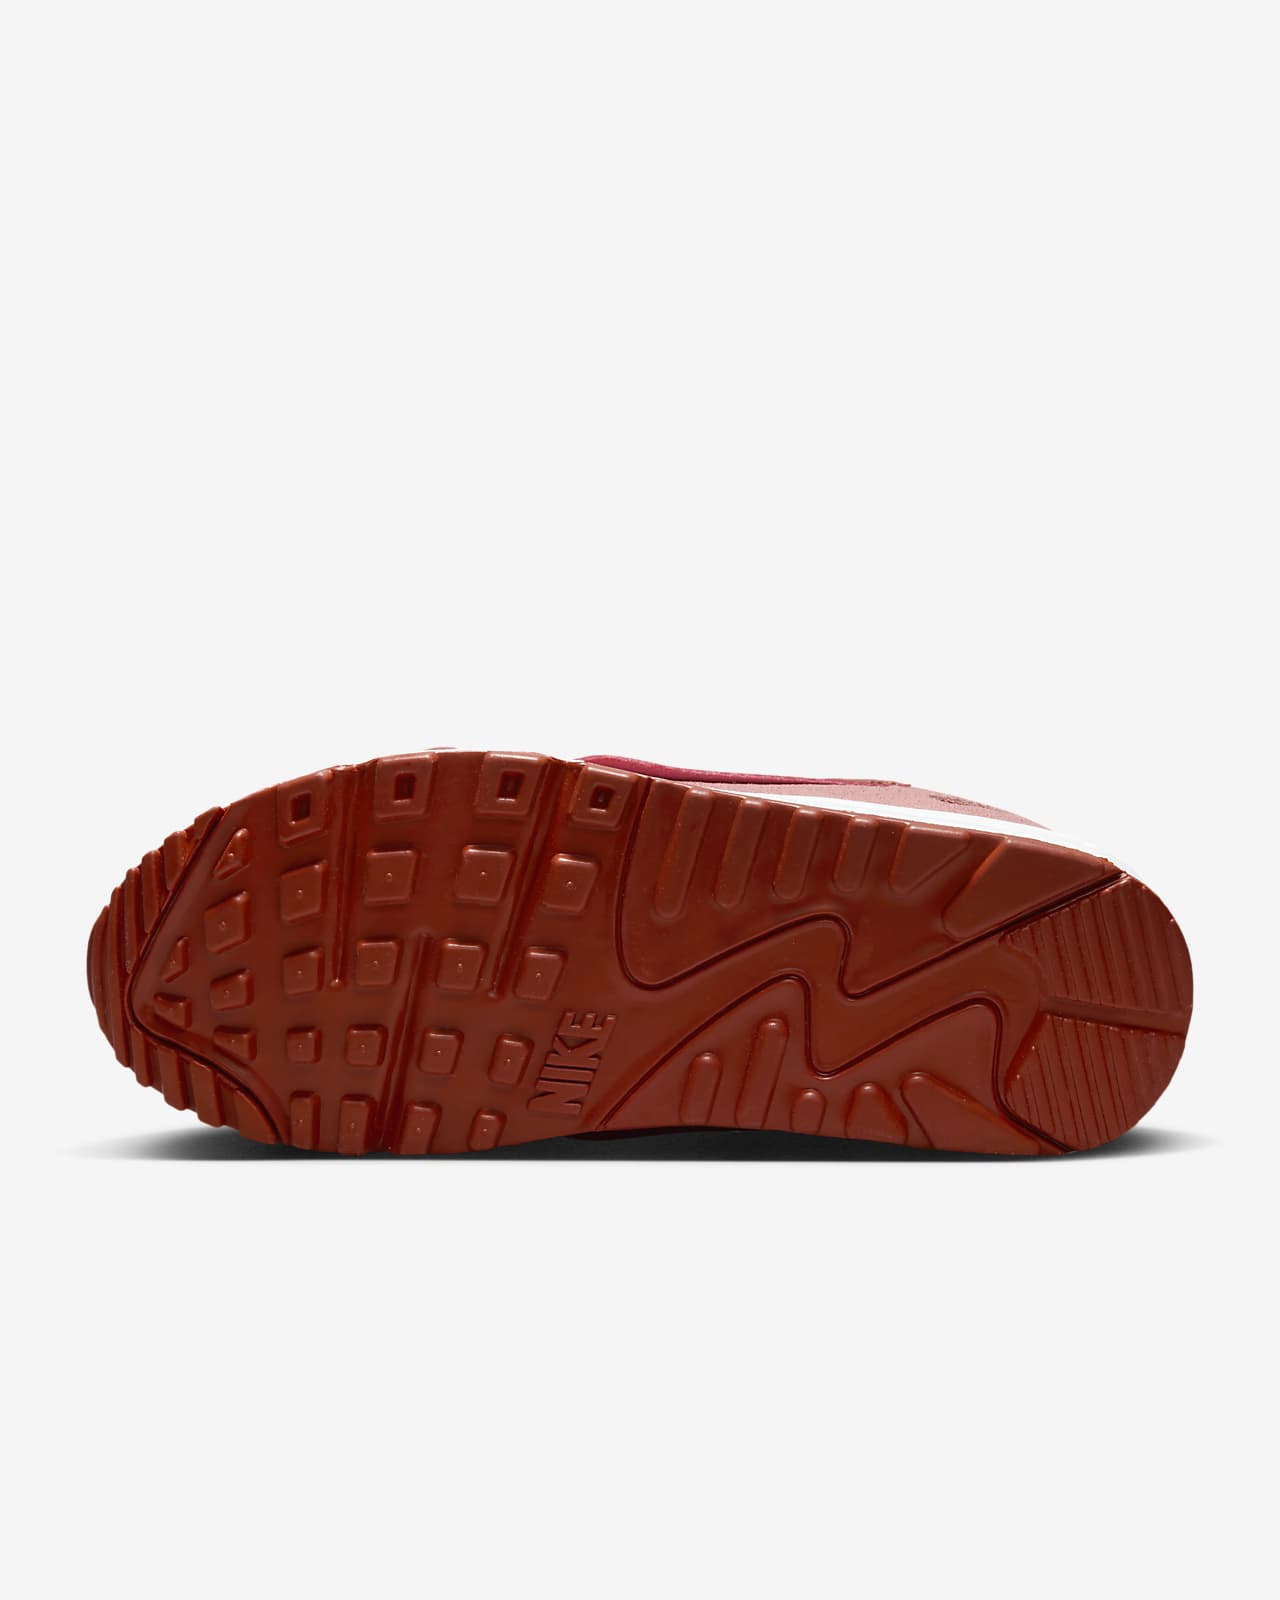 Nike Air Max 90 Futura Sneaker in Red Stardust, Rugged Orange